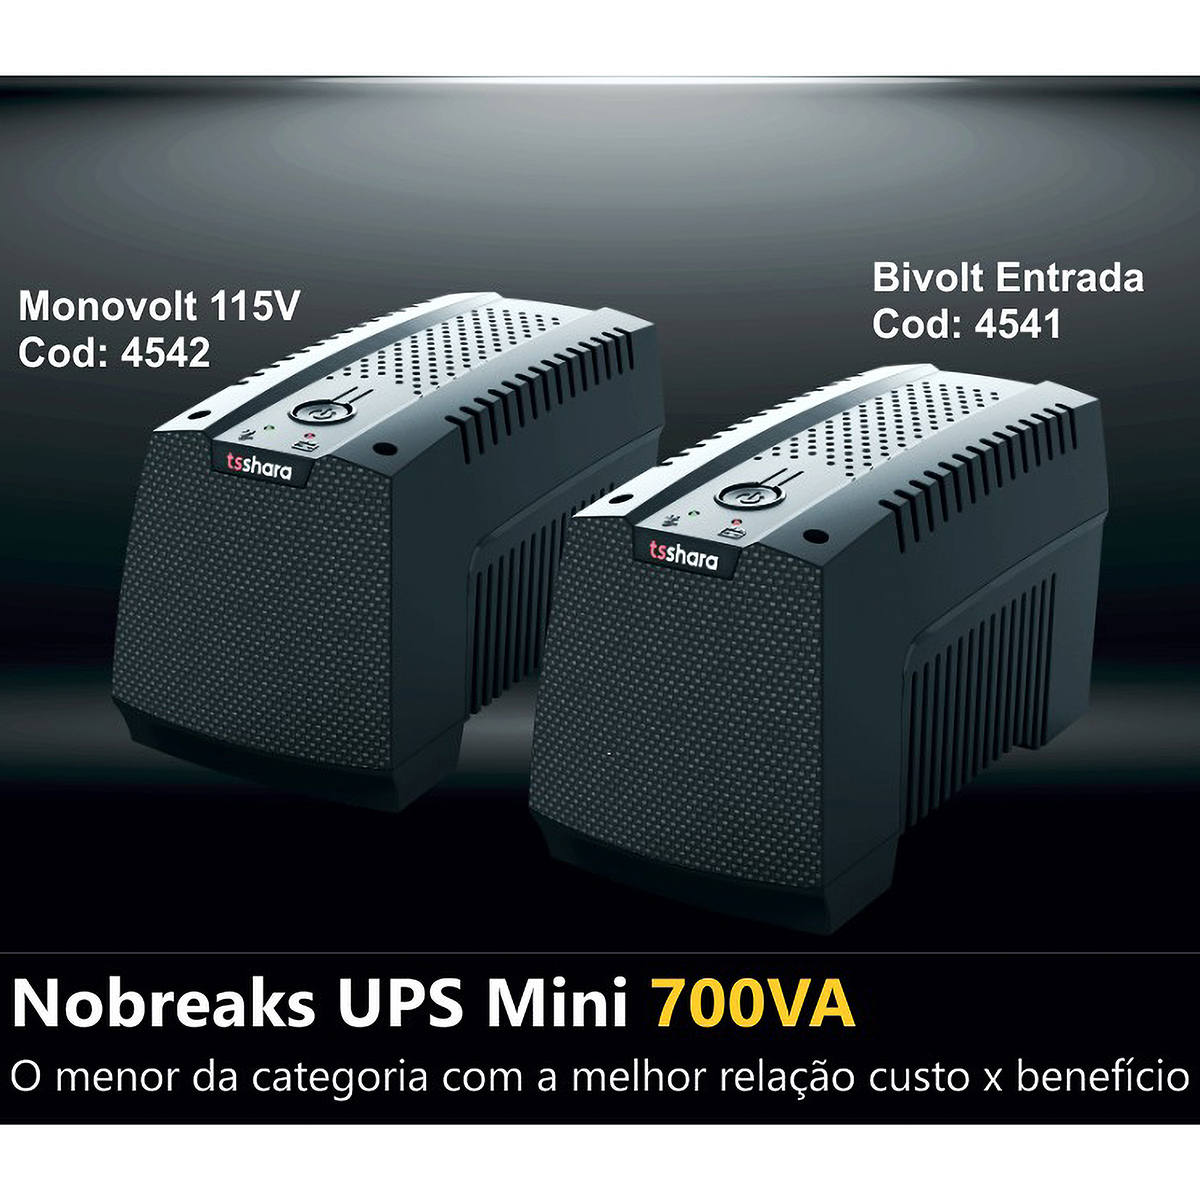 Nobreak Mini 700VA 455W PWM 12V Monovolt Entrada/Saída 115V TS Shara UPS XPro 4542